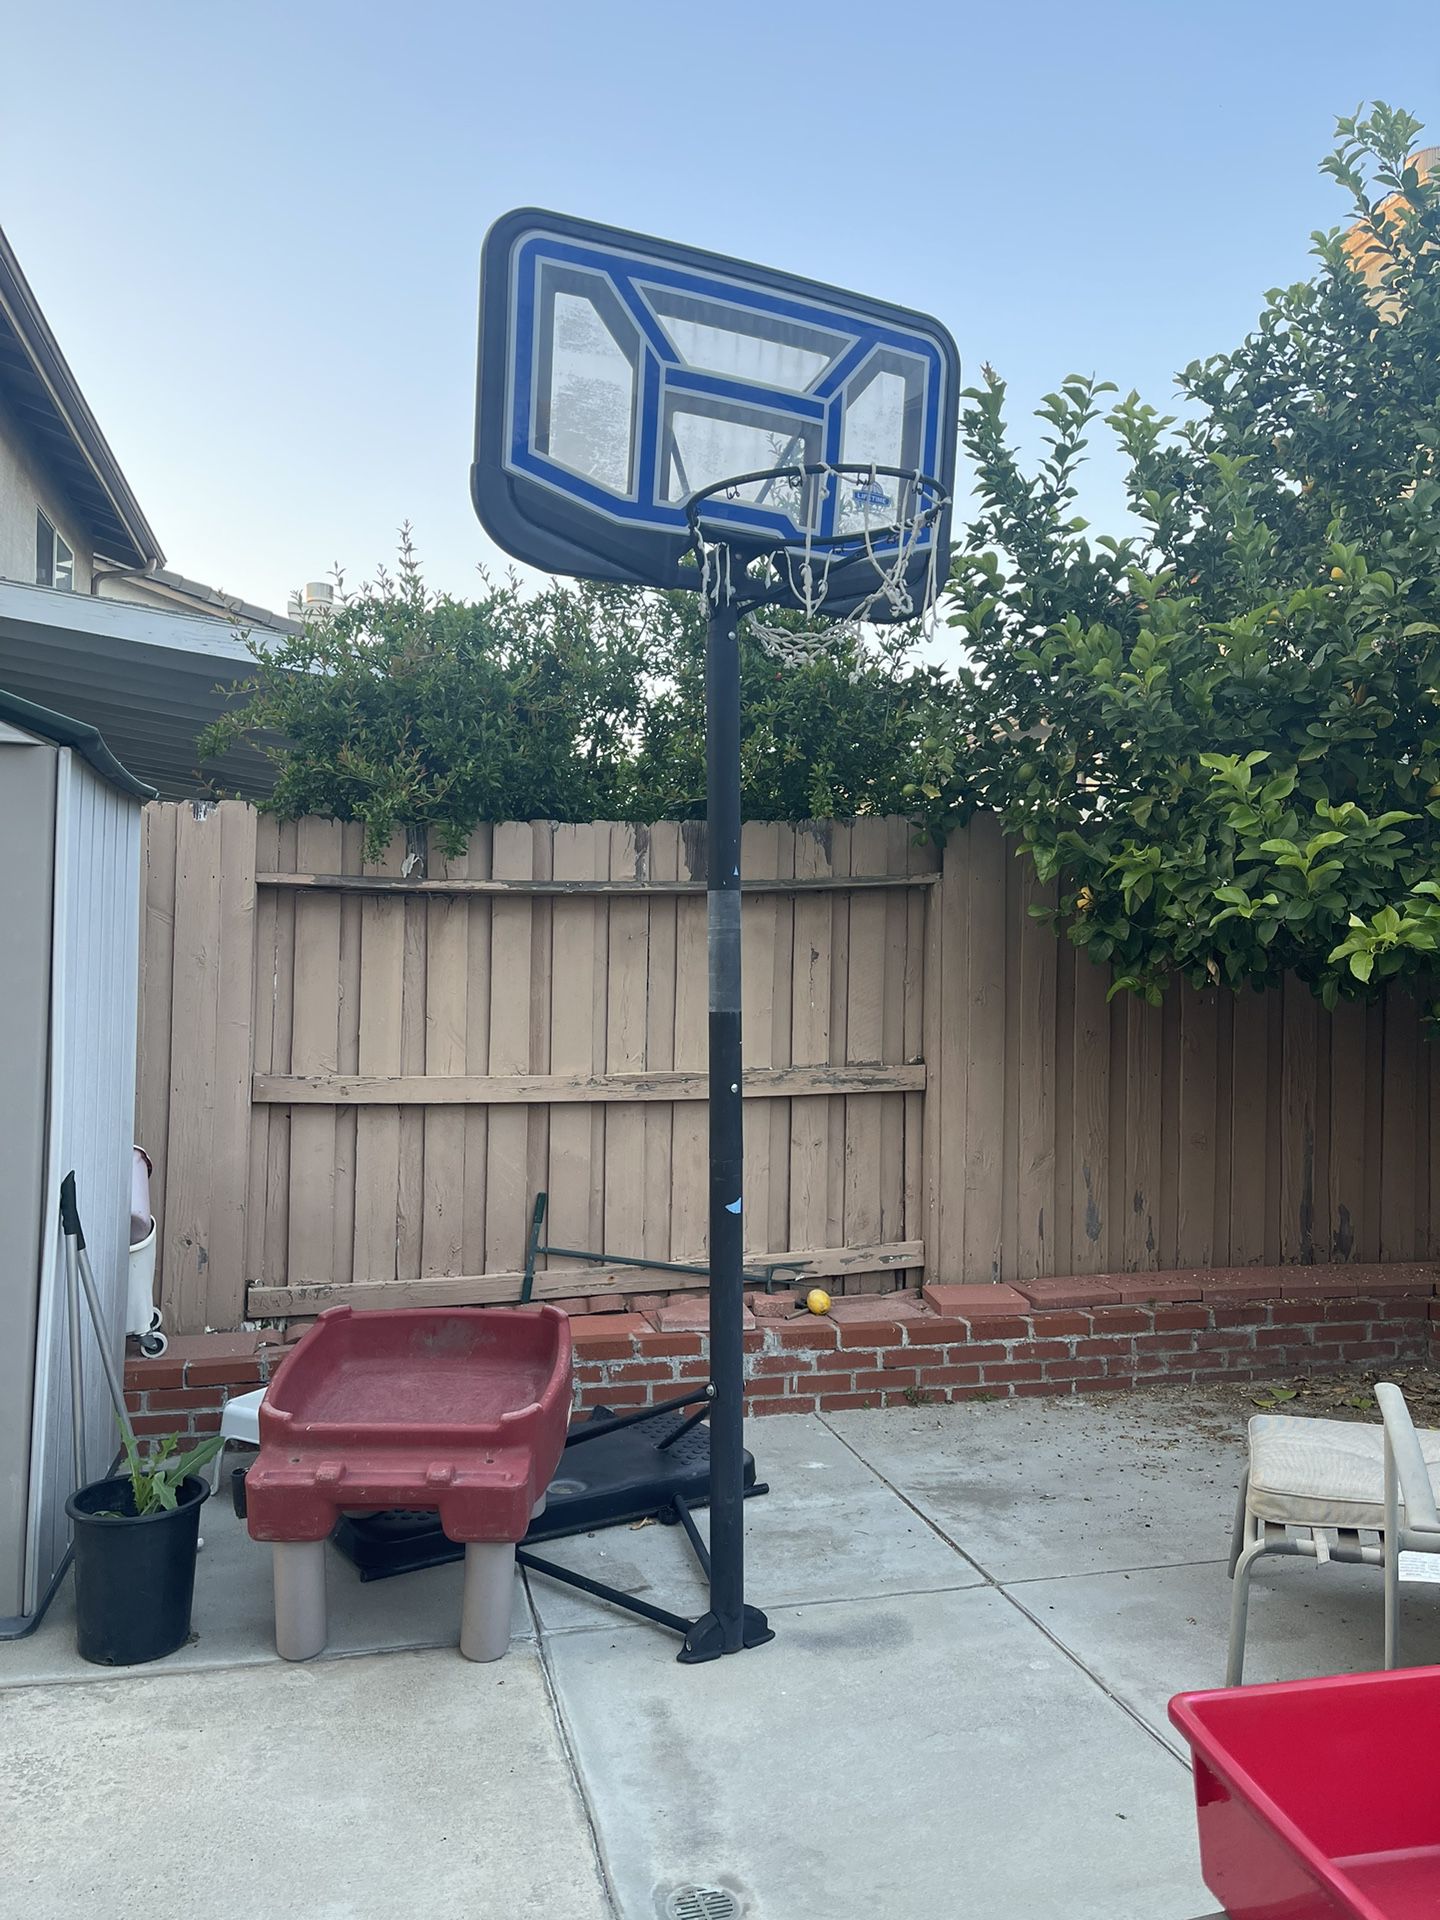 basketball hoop stand